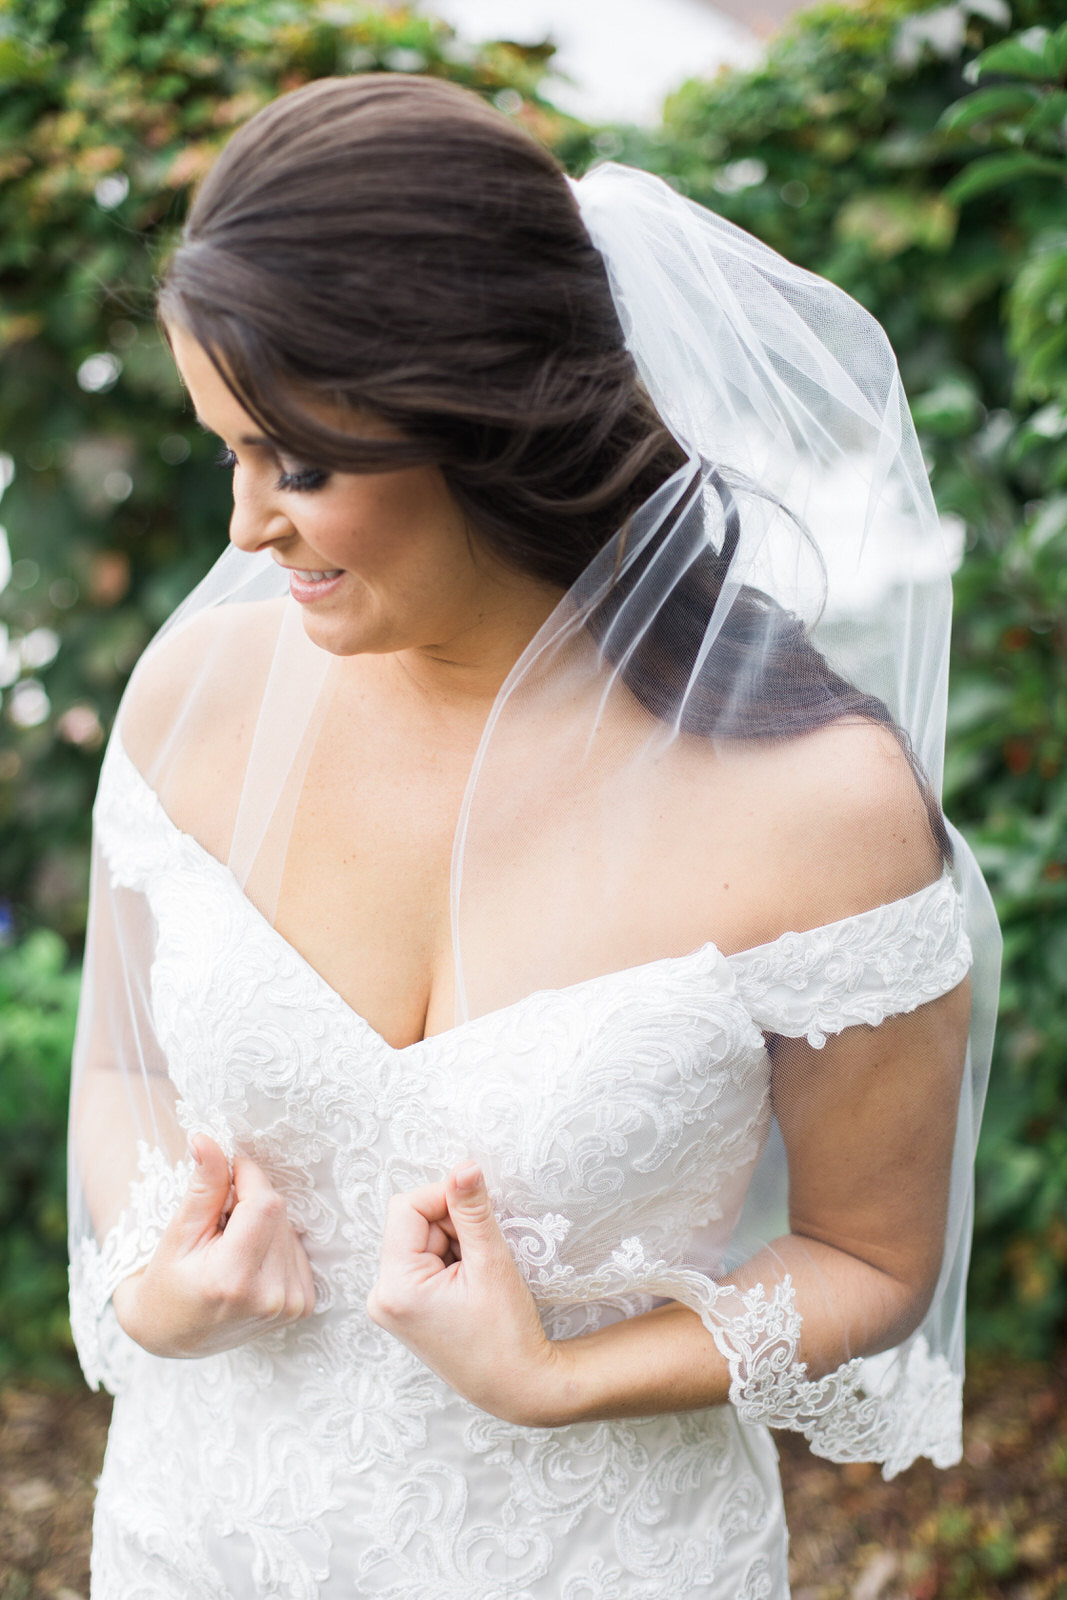 single layer sheer wedding veil in half up half down hairdo